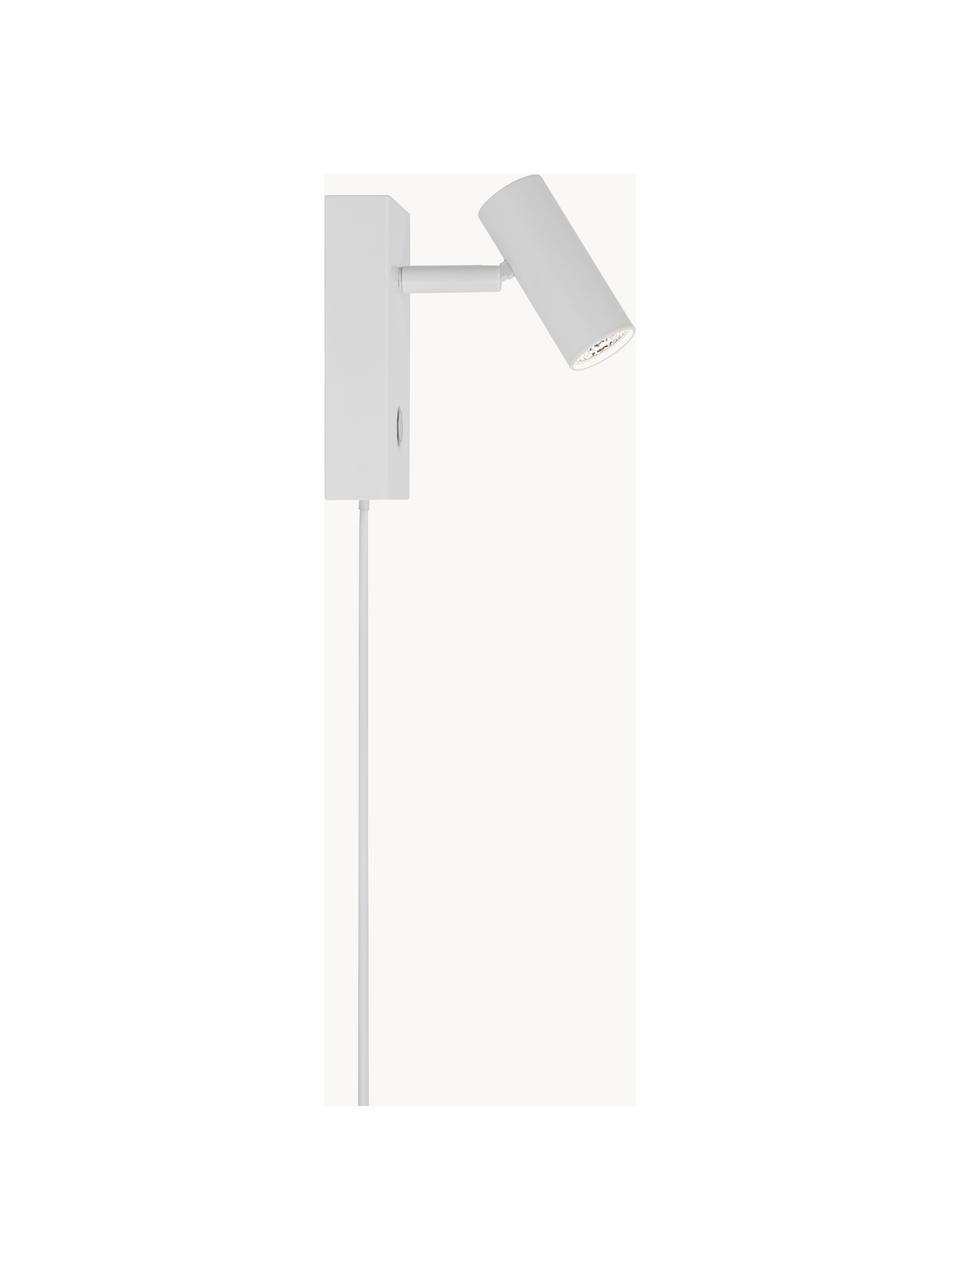 Petite applique LED Omari, intensité lumineuse variable, Blanc, larg. 7 x haut. 12 cm